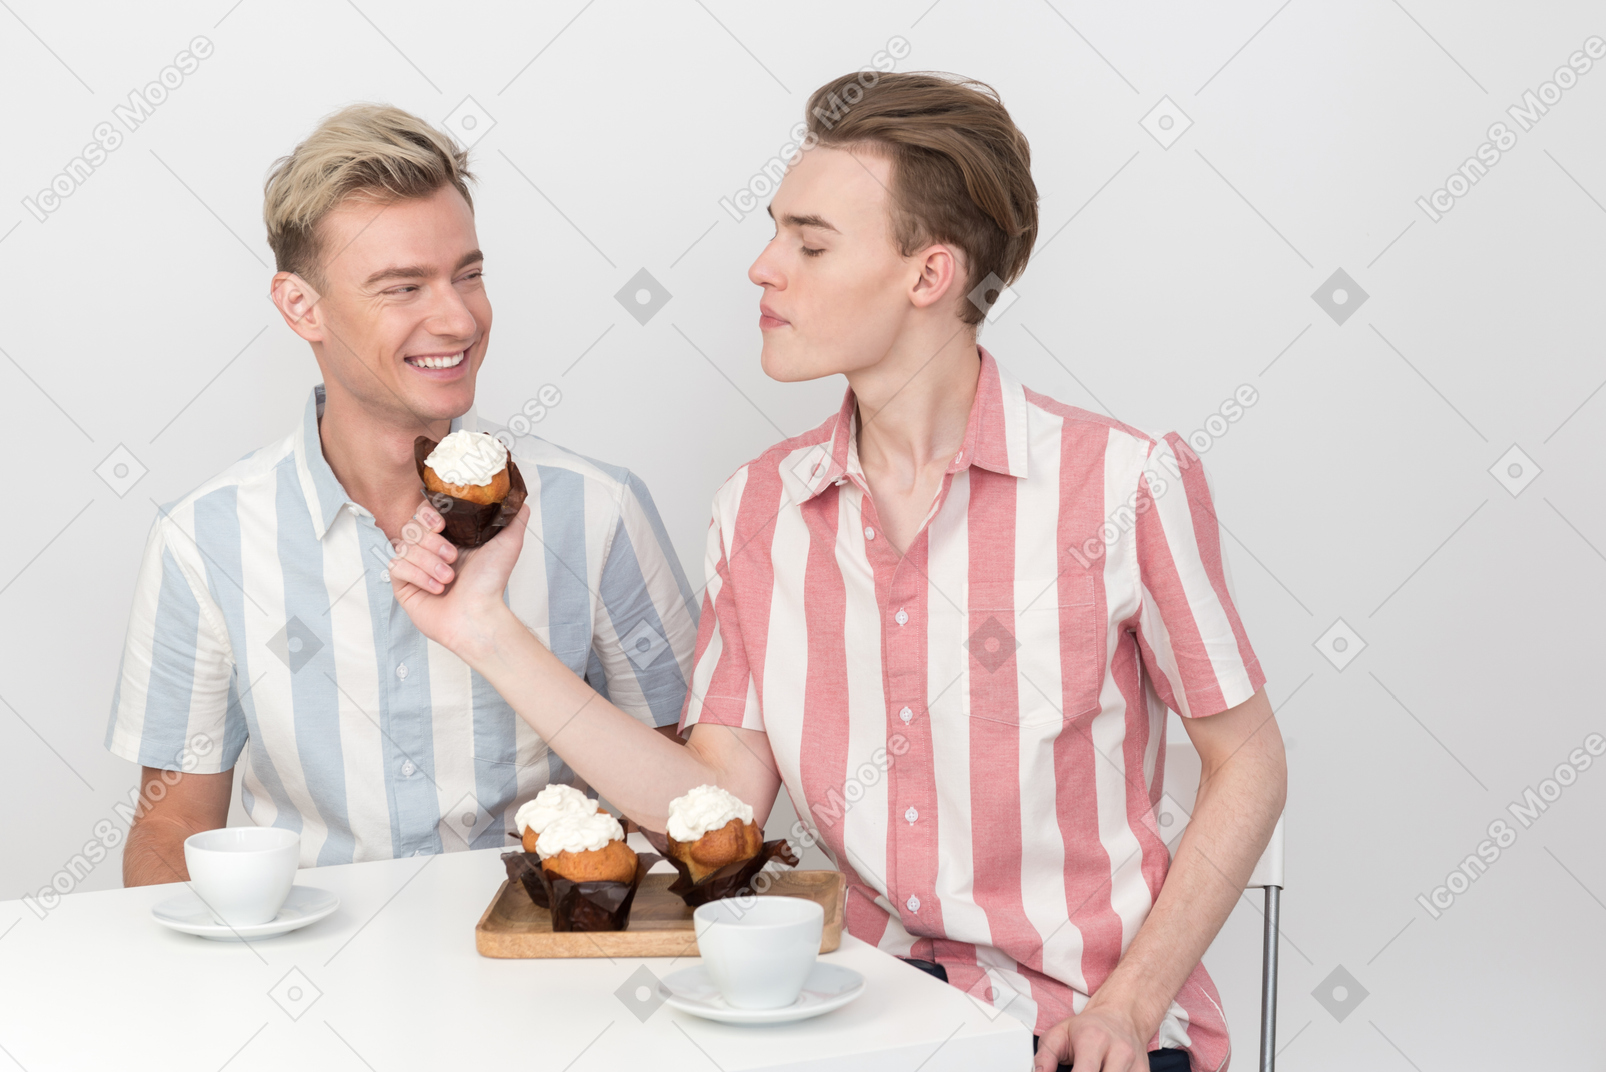 Guy proposing his partner to eat a cupcake